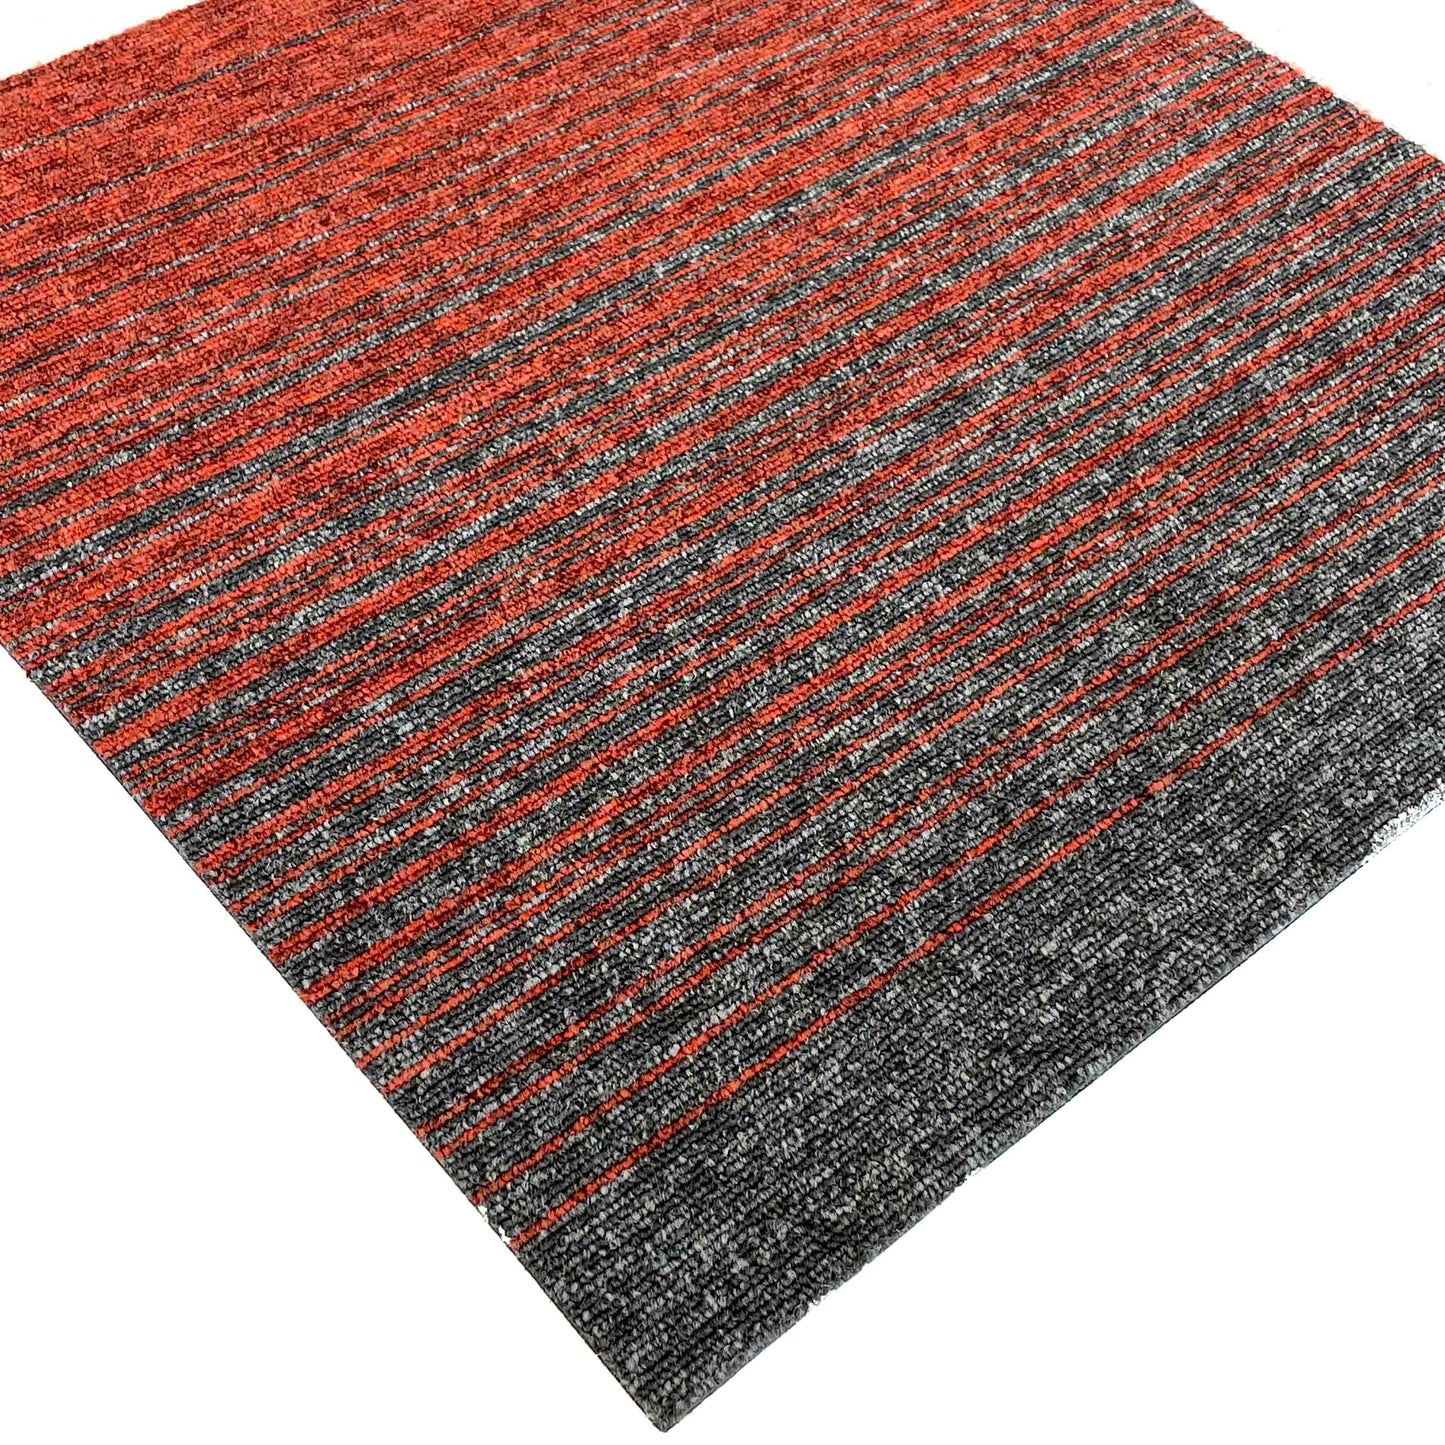 Black and Red Gradient Carpet Tiles